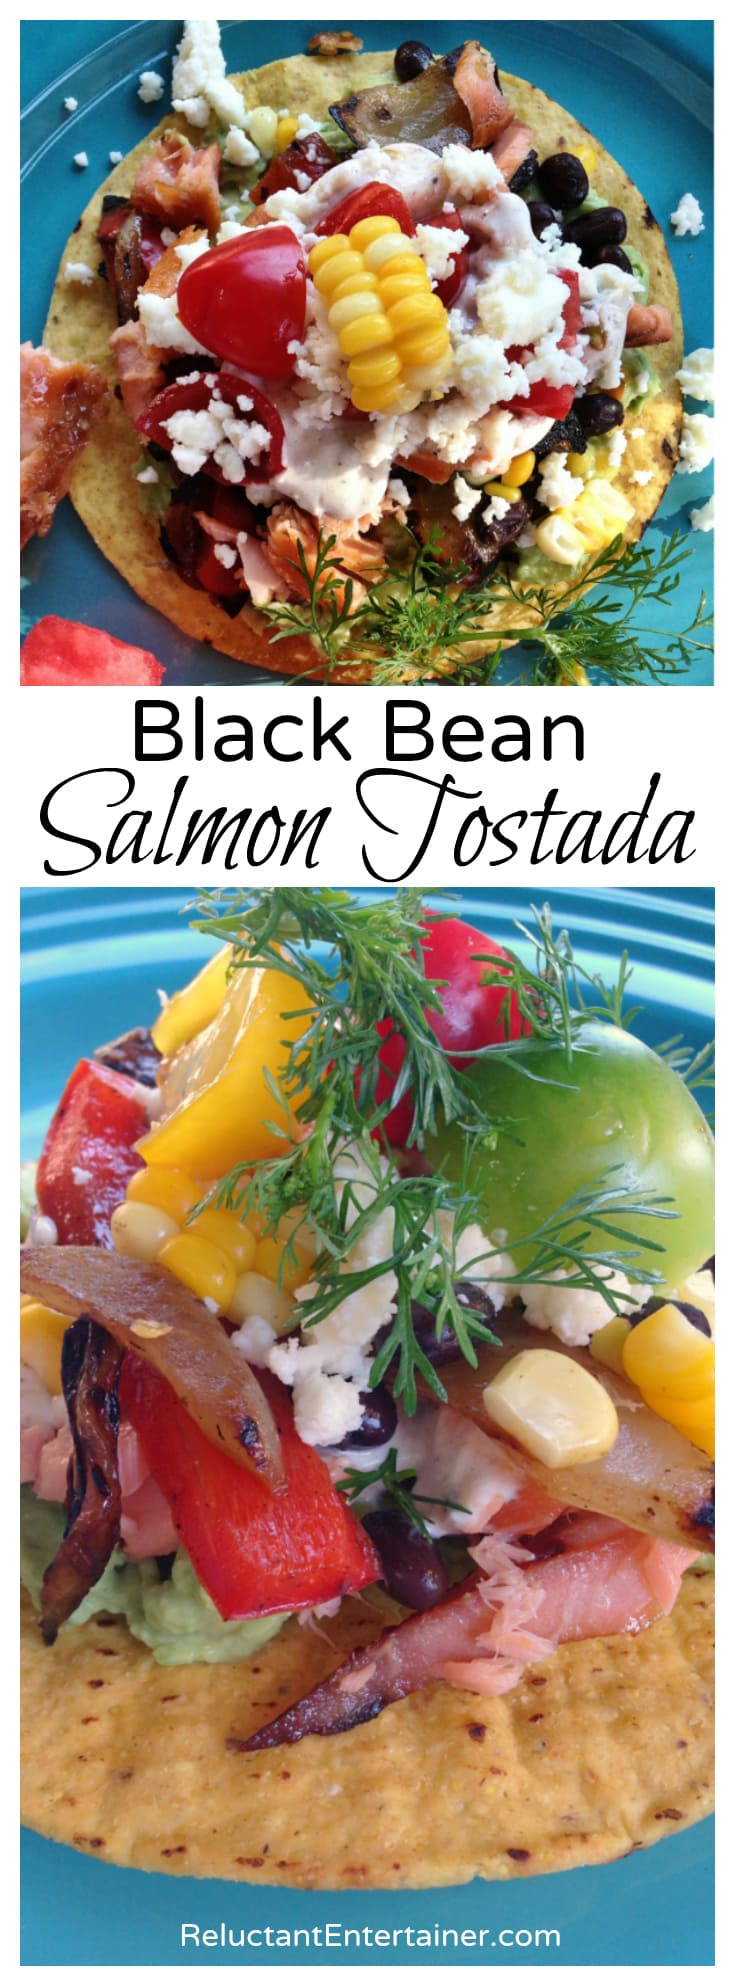 Black Bean Salmon Tostada